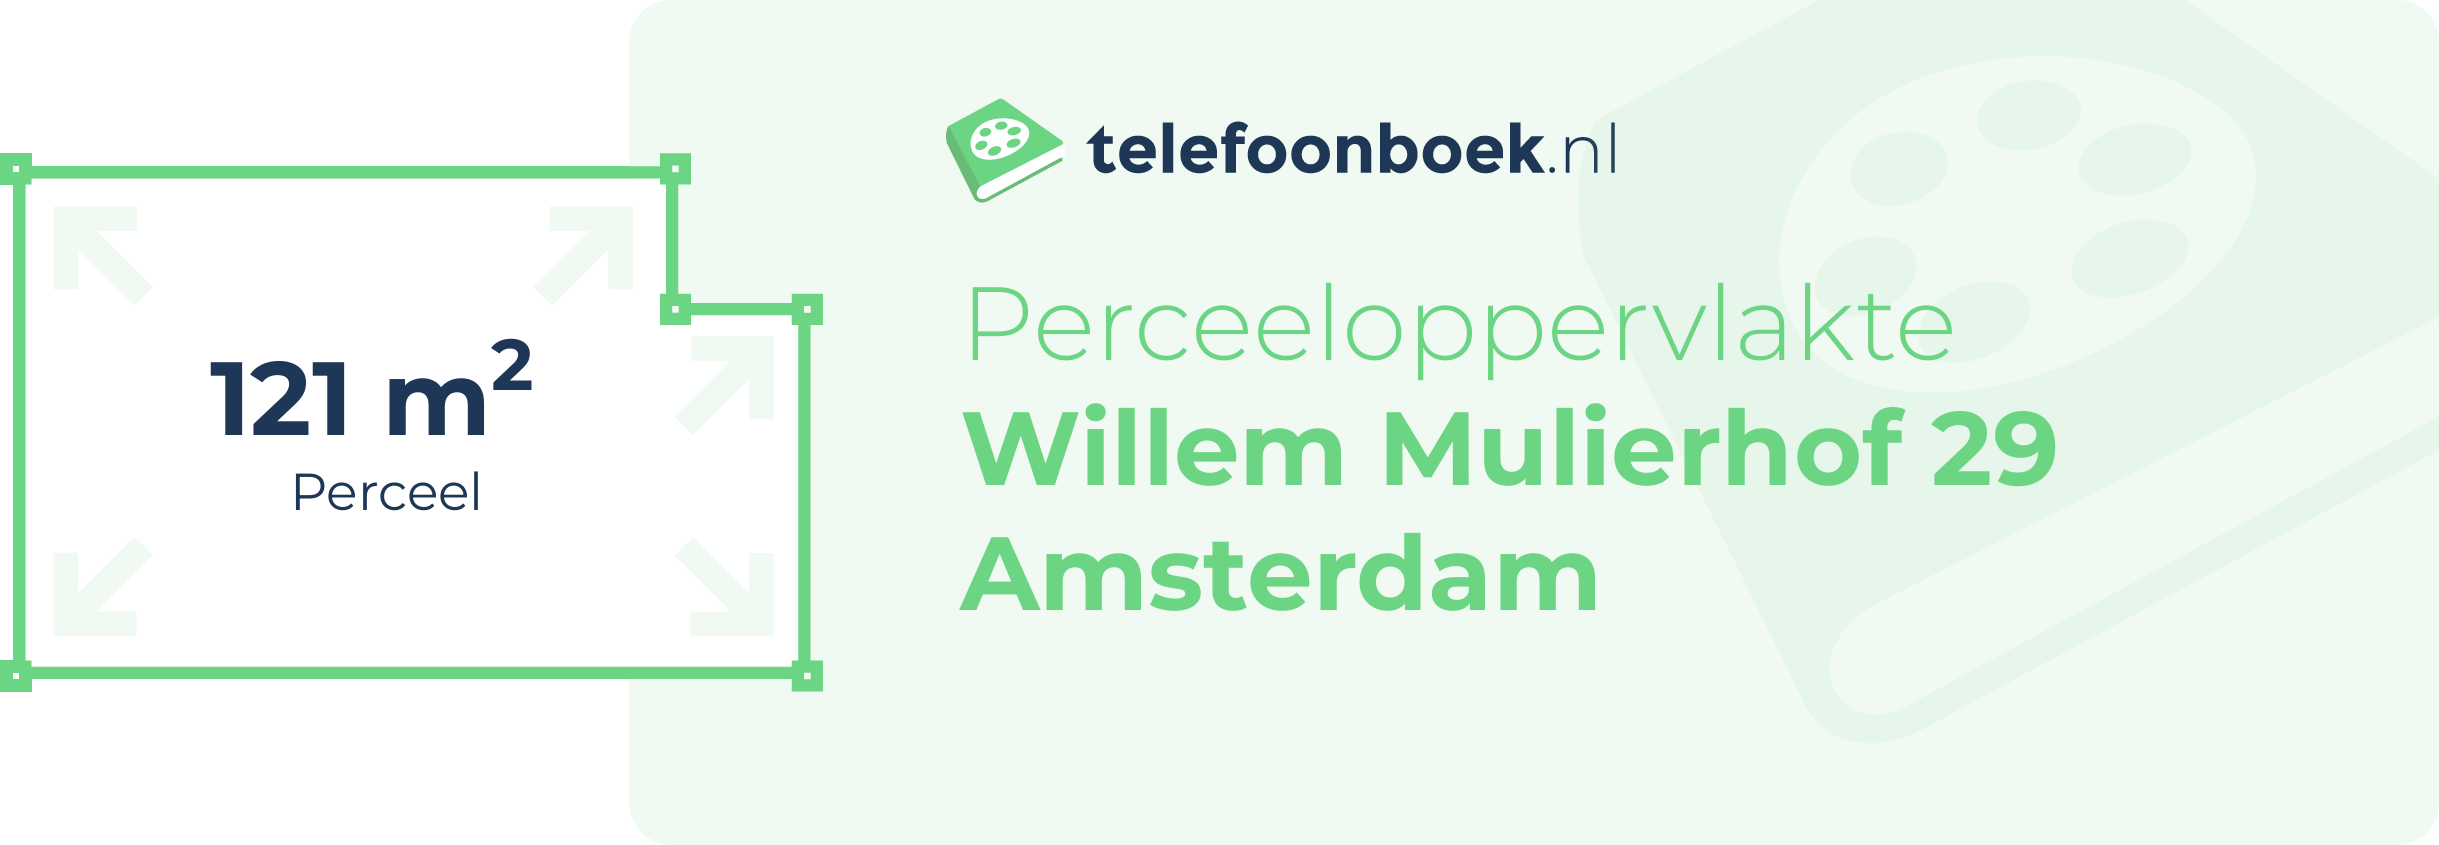 Perceeloppervlakte Willem Mulierhof 29 Amsterdam